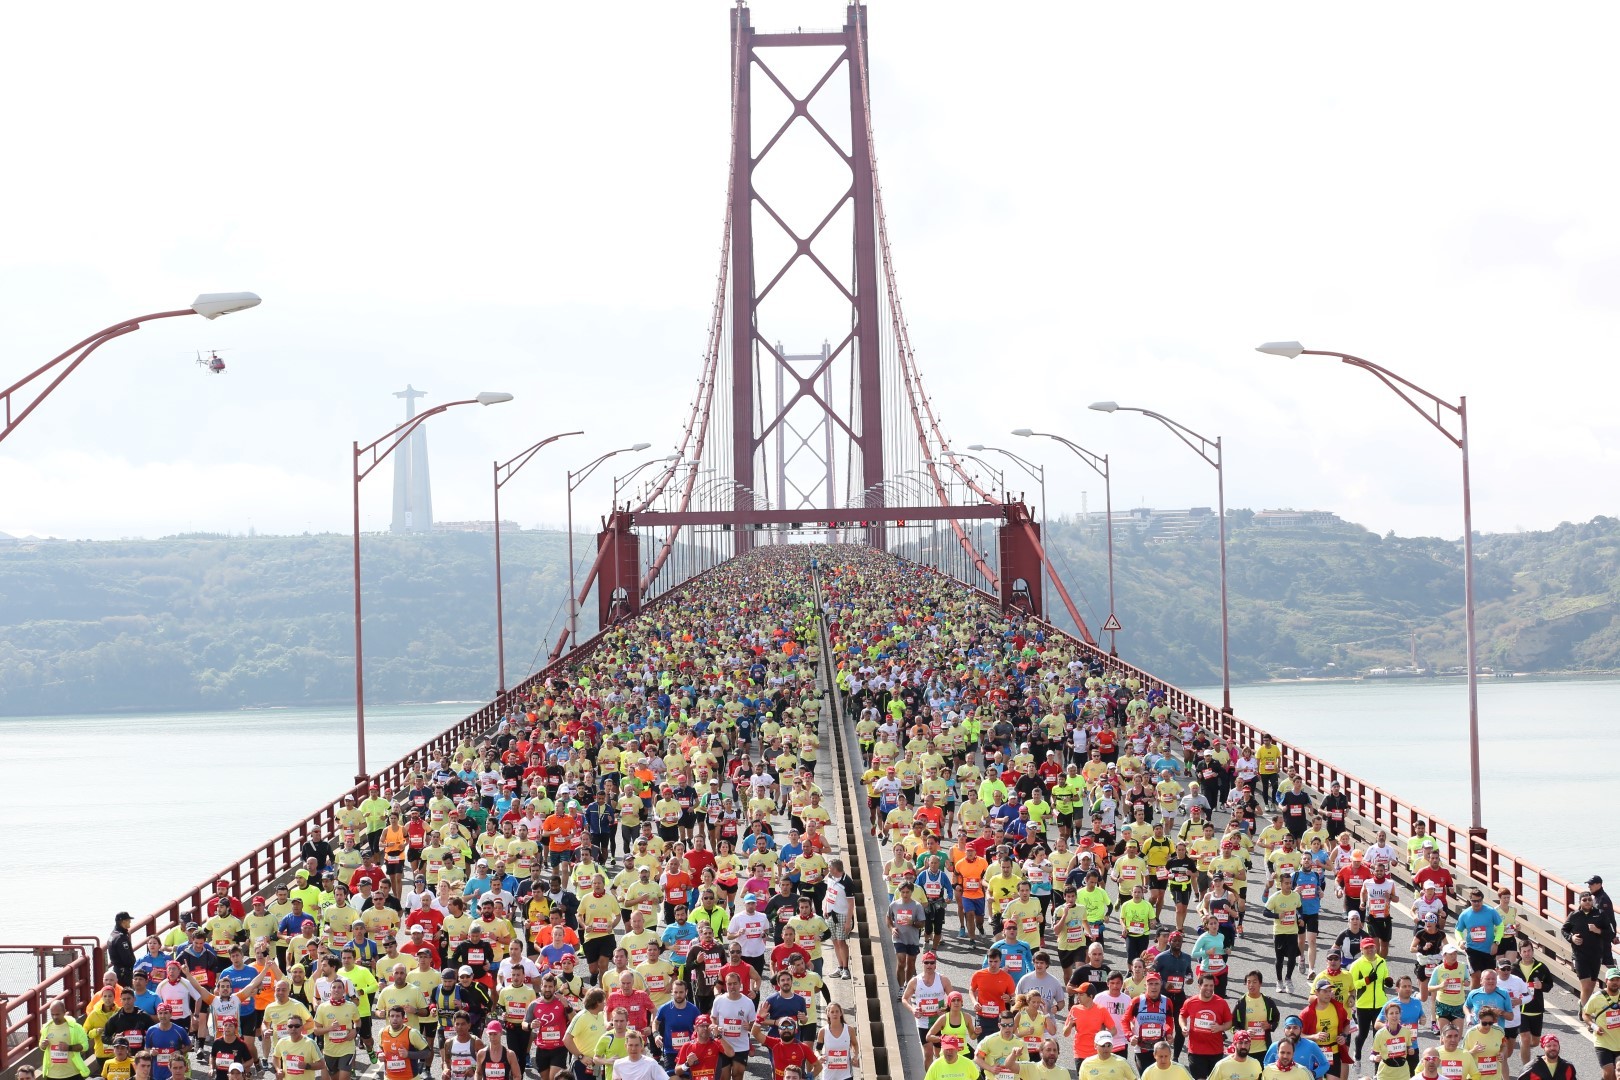 The Lisbon Half Marathon, originally scheduled for March 22, is now postponed to September 5 2020 due to coronavirus